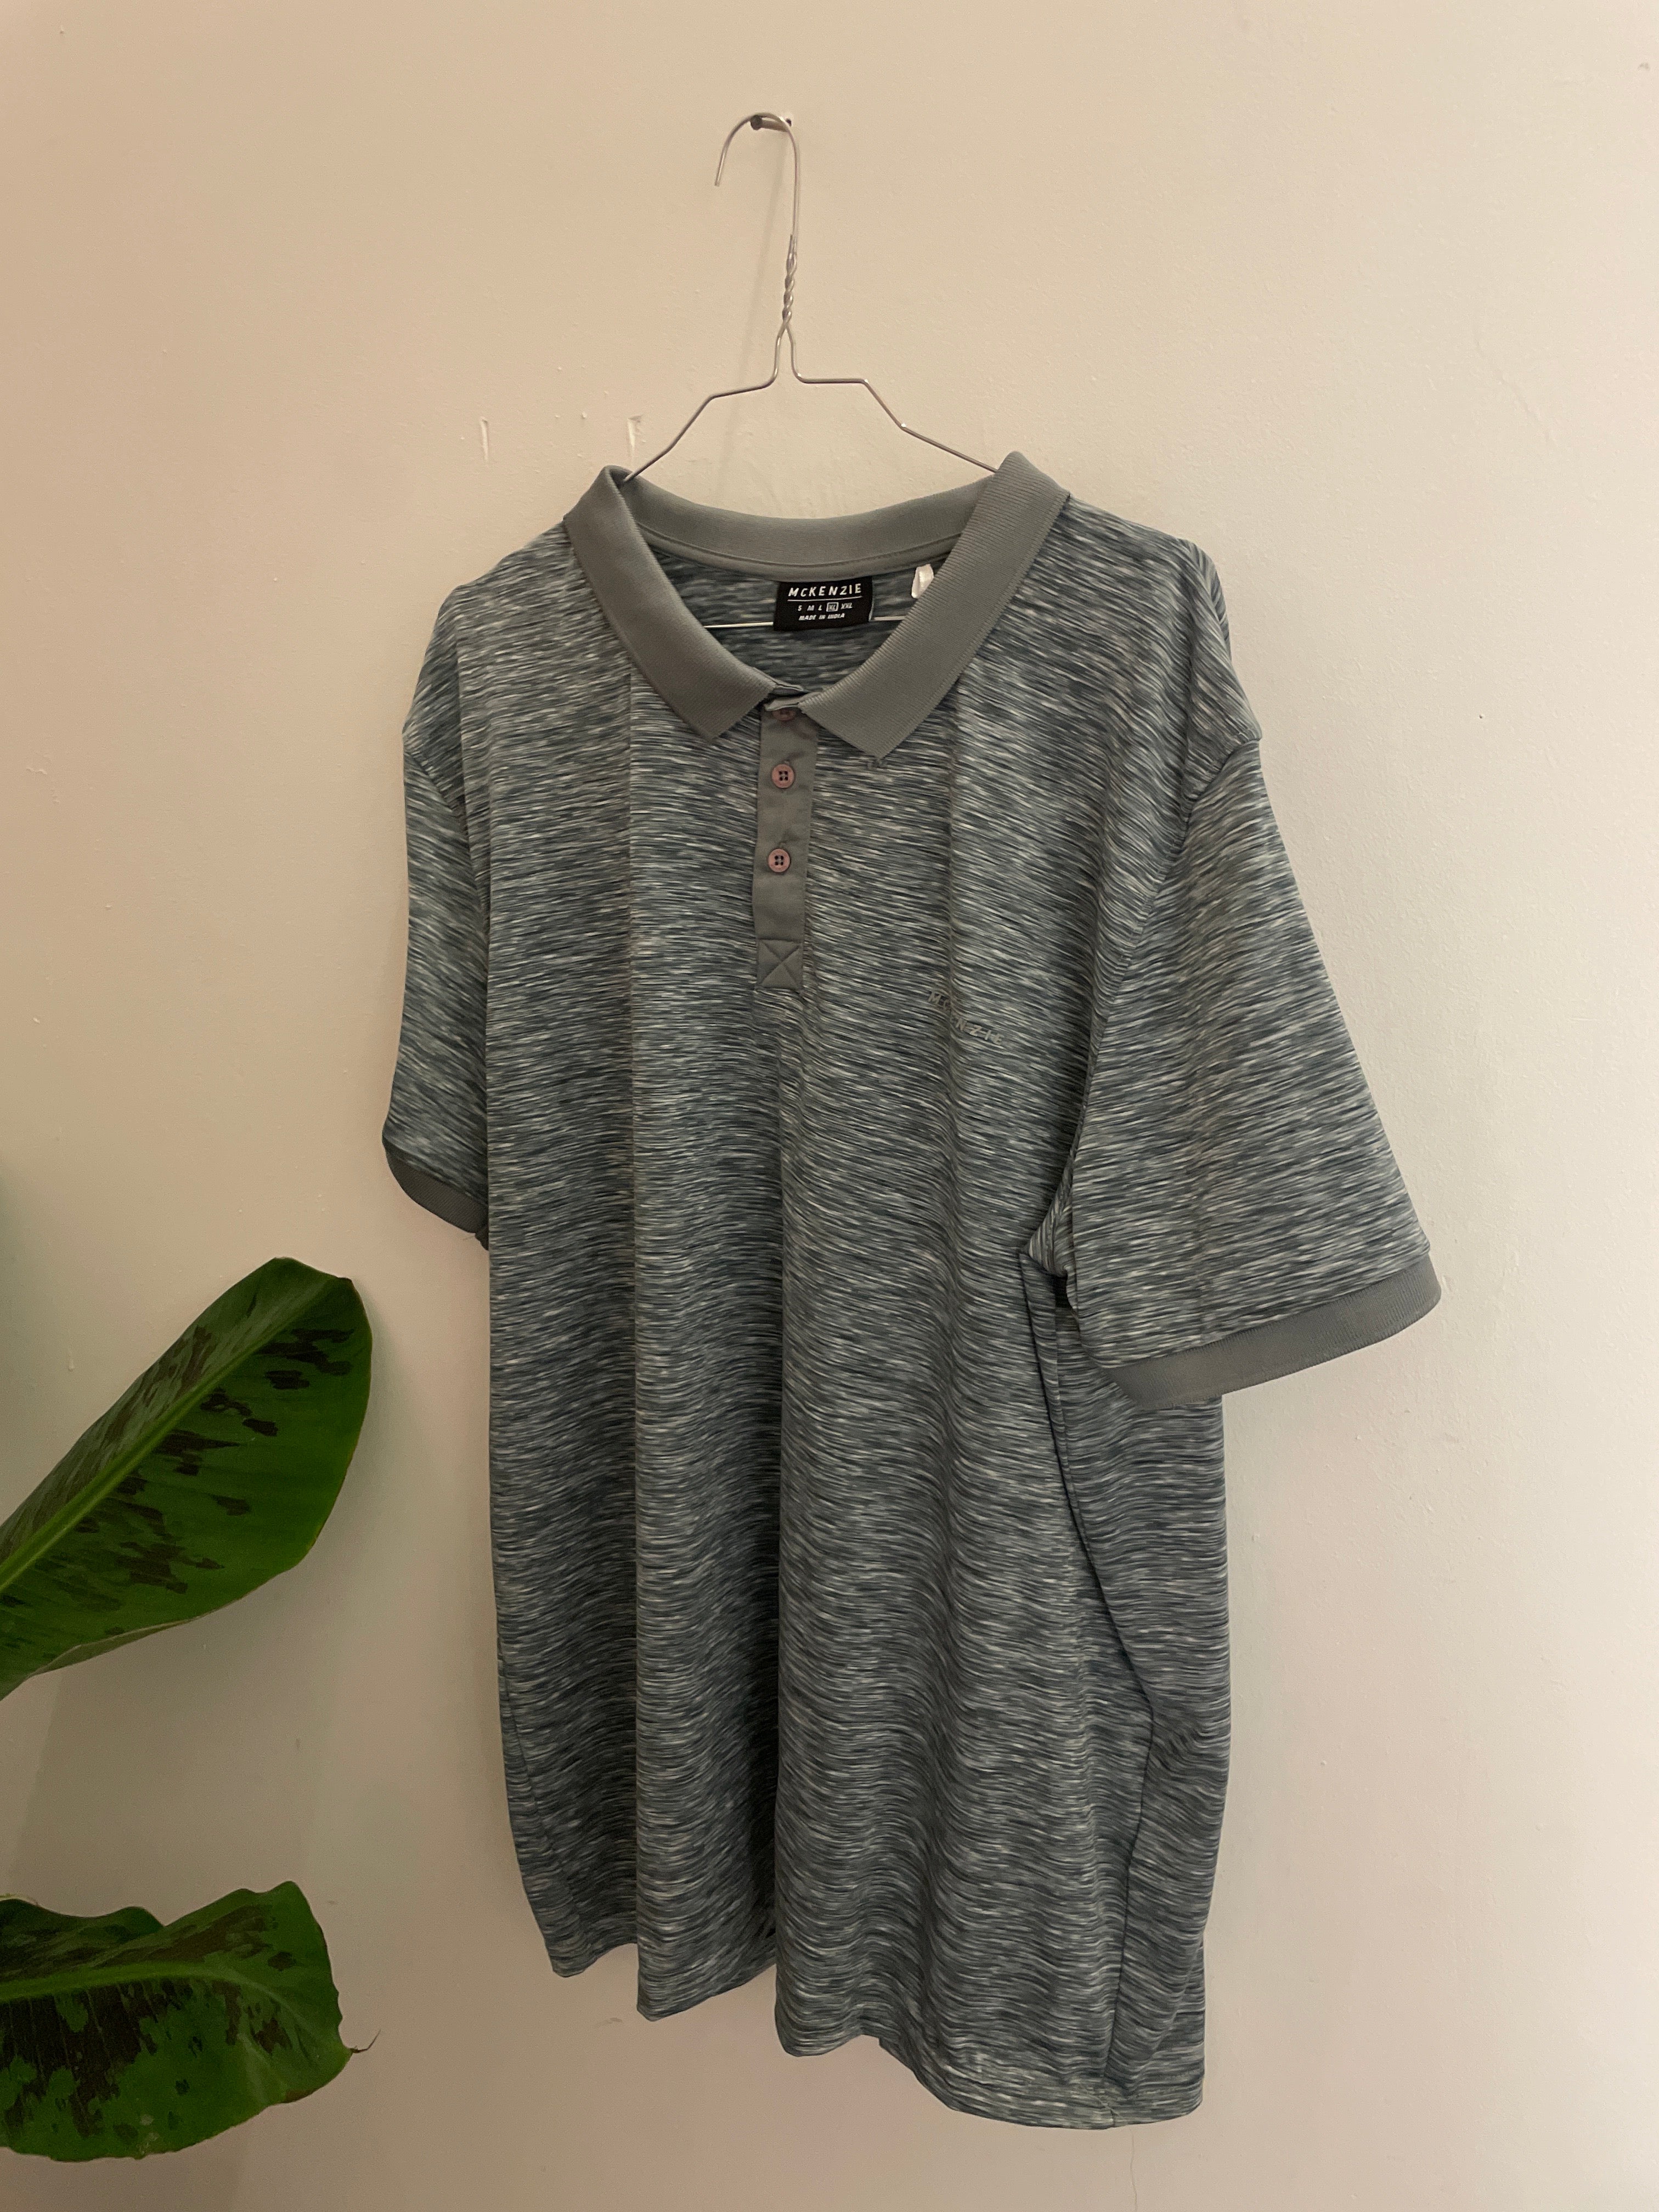 Vintage mckenzie grey mens polo shirt size XL